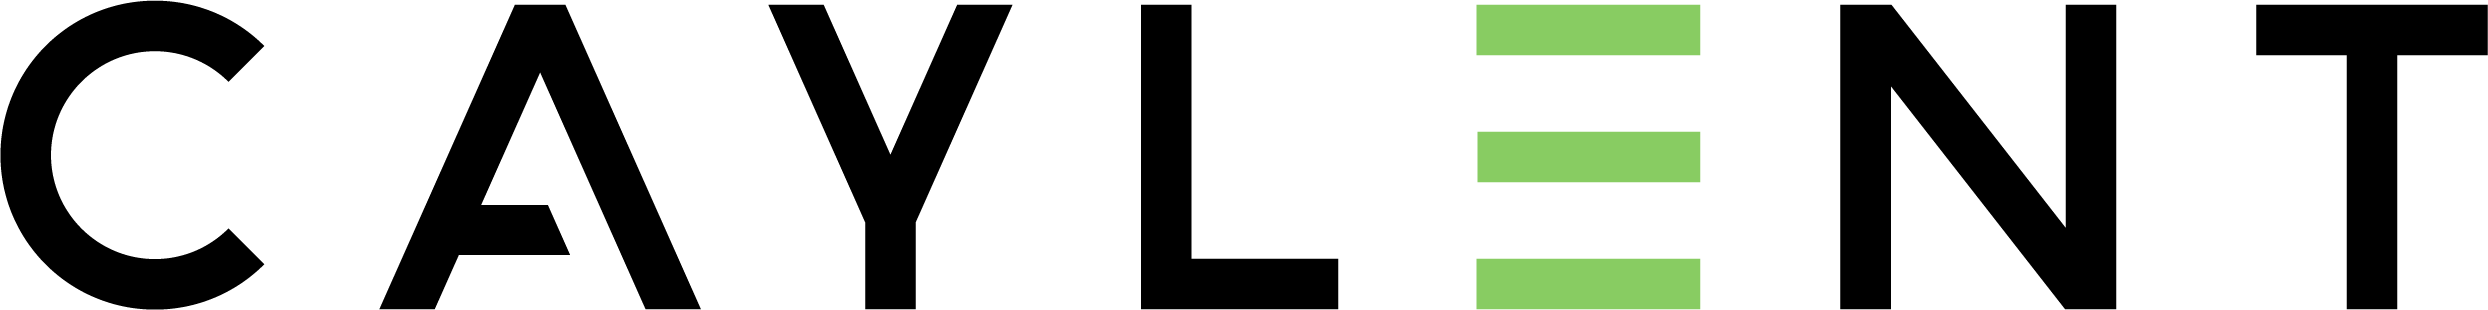 Caylent Logo Black-2